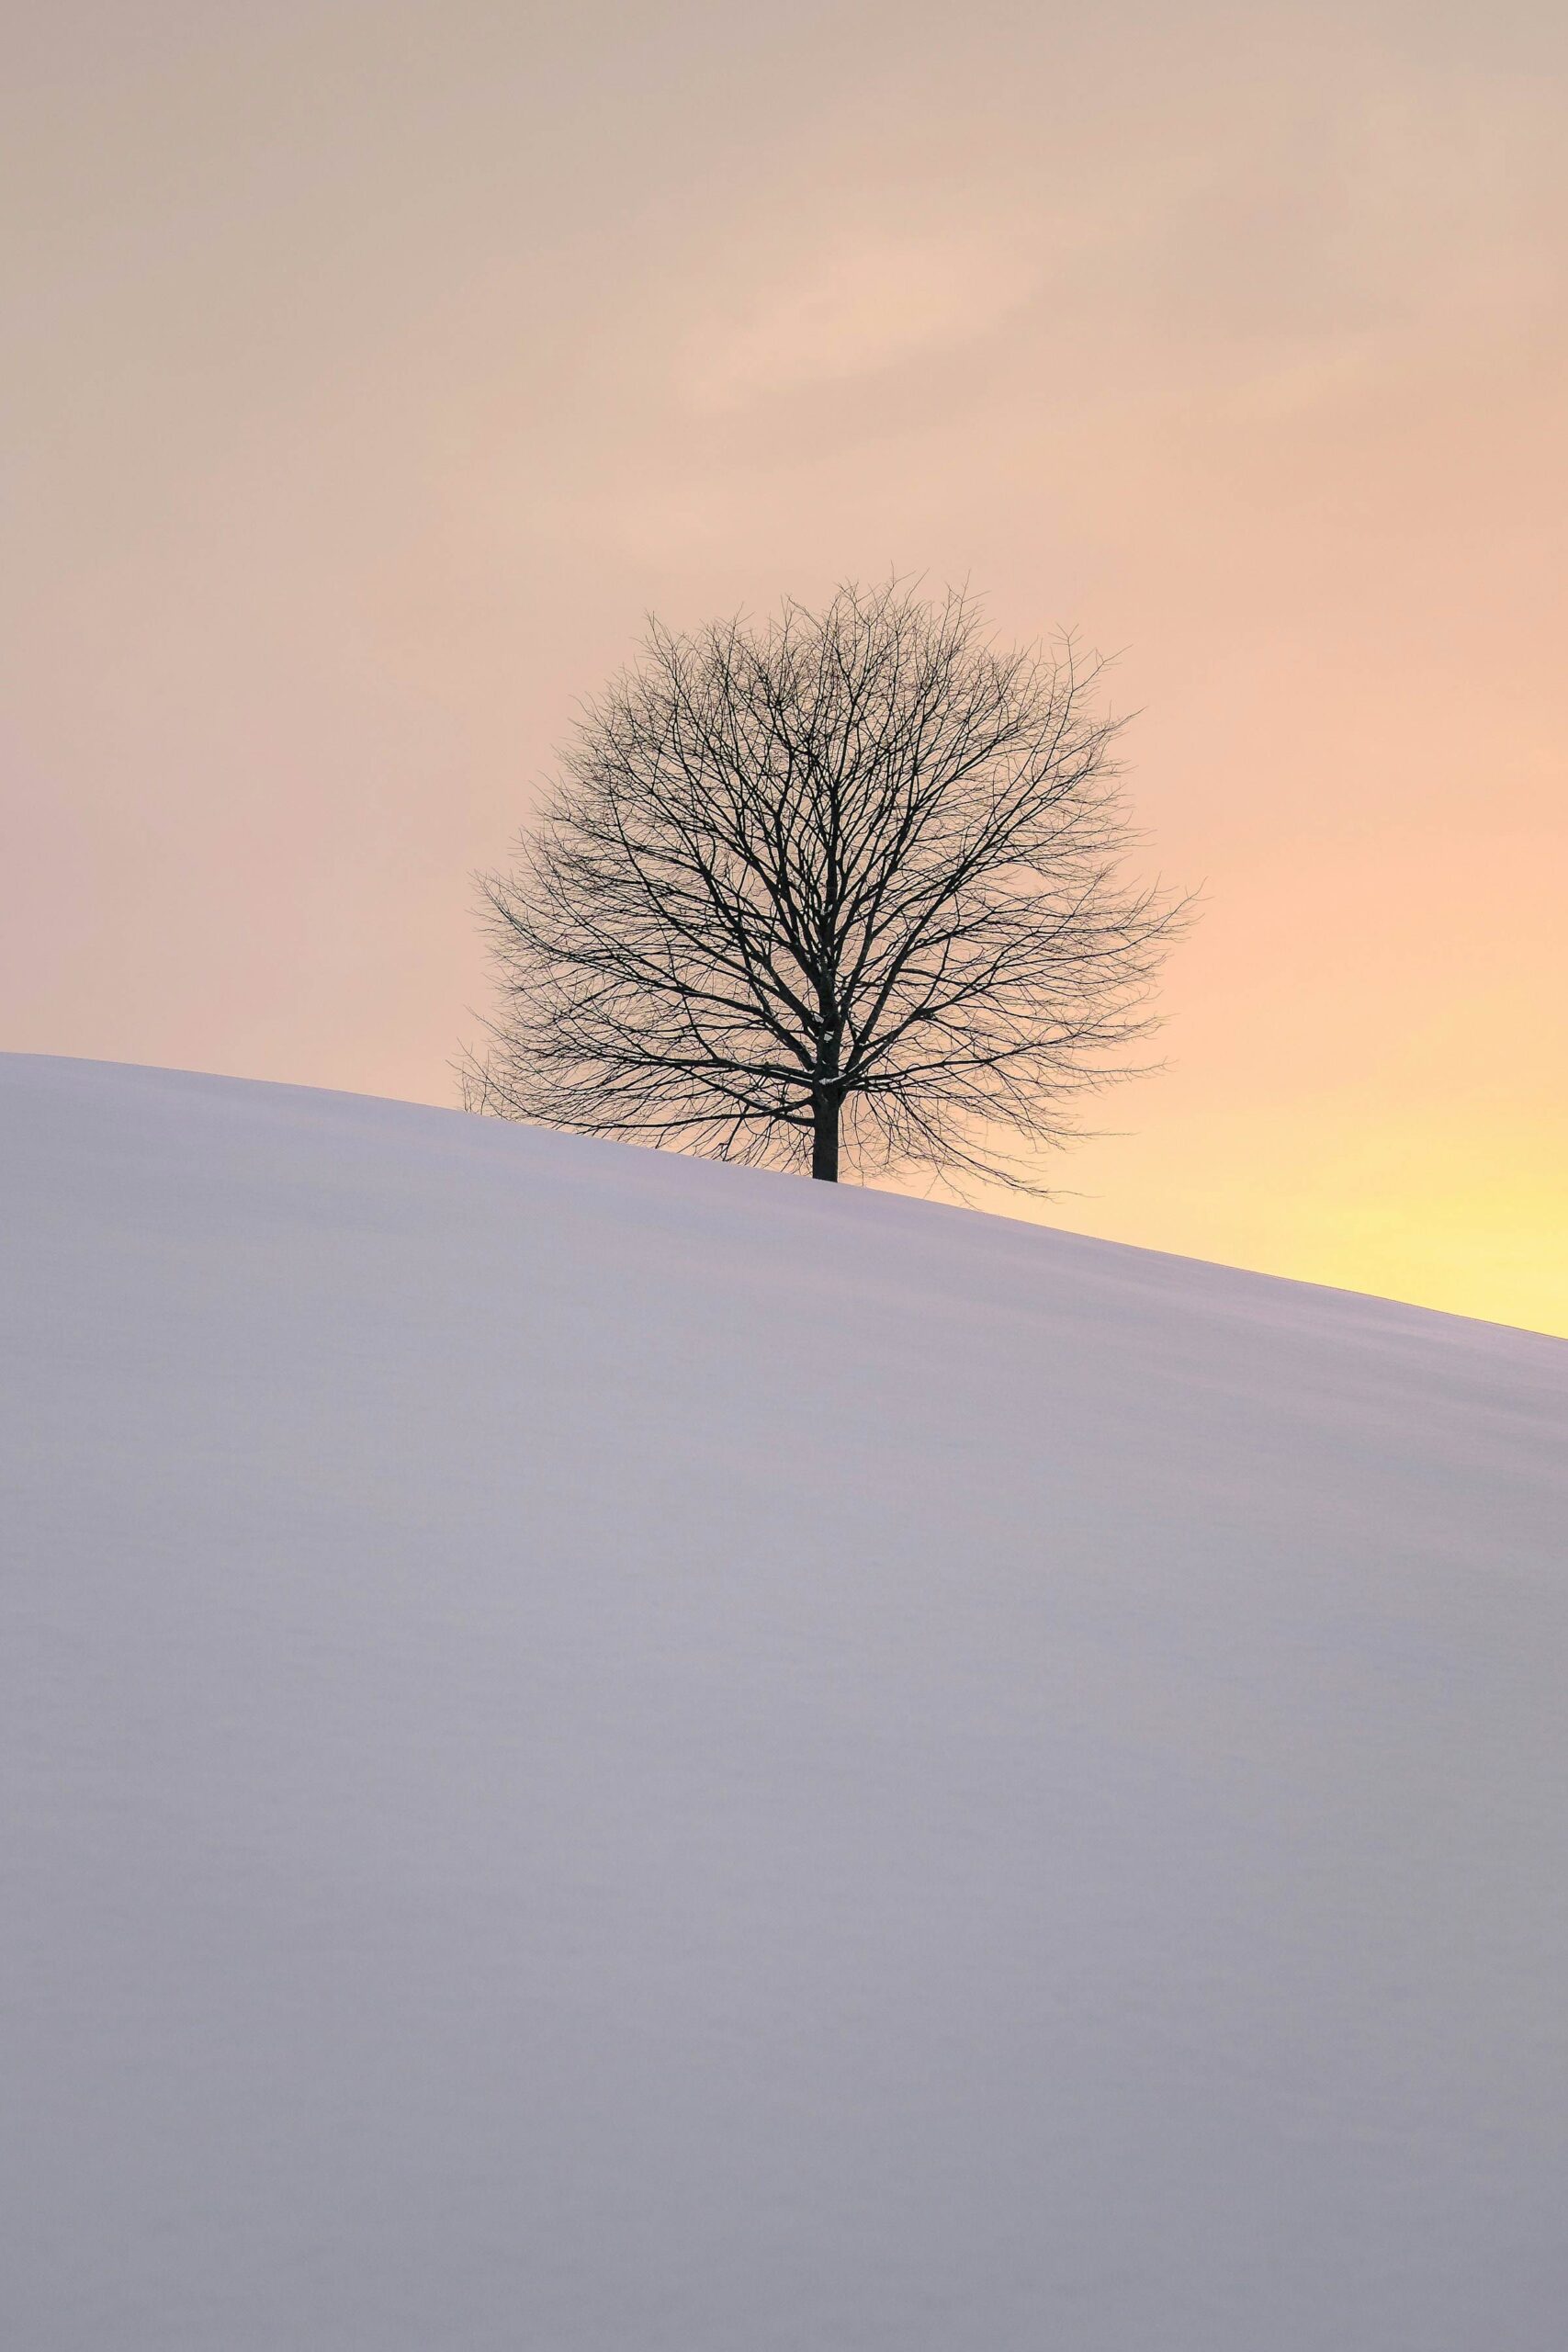 Winter Tree Background